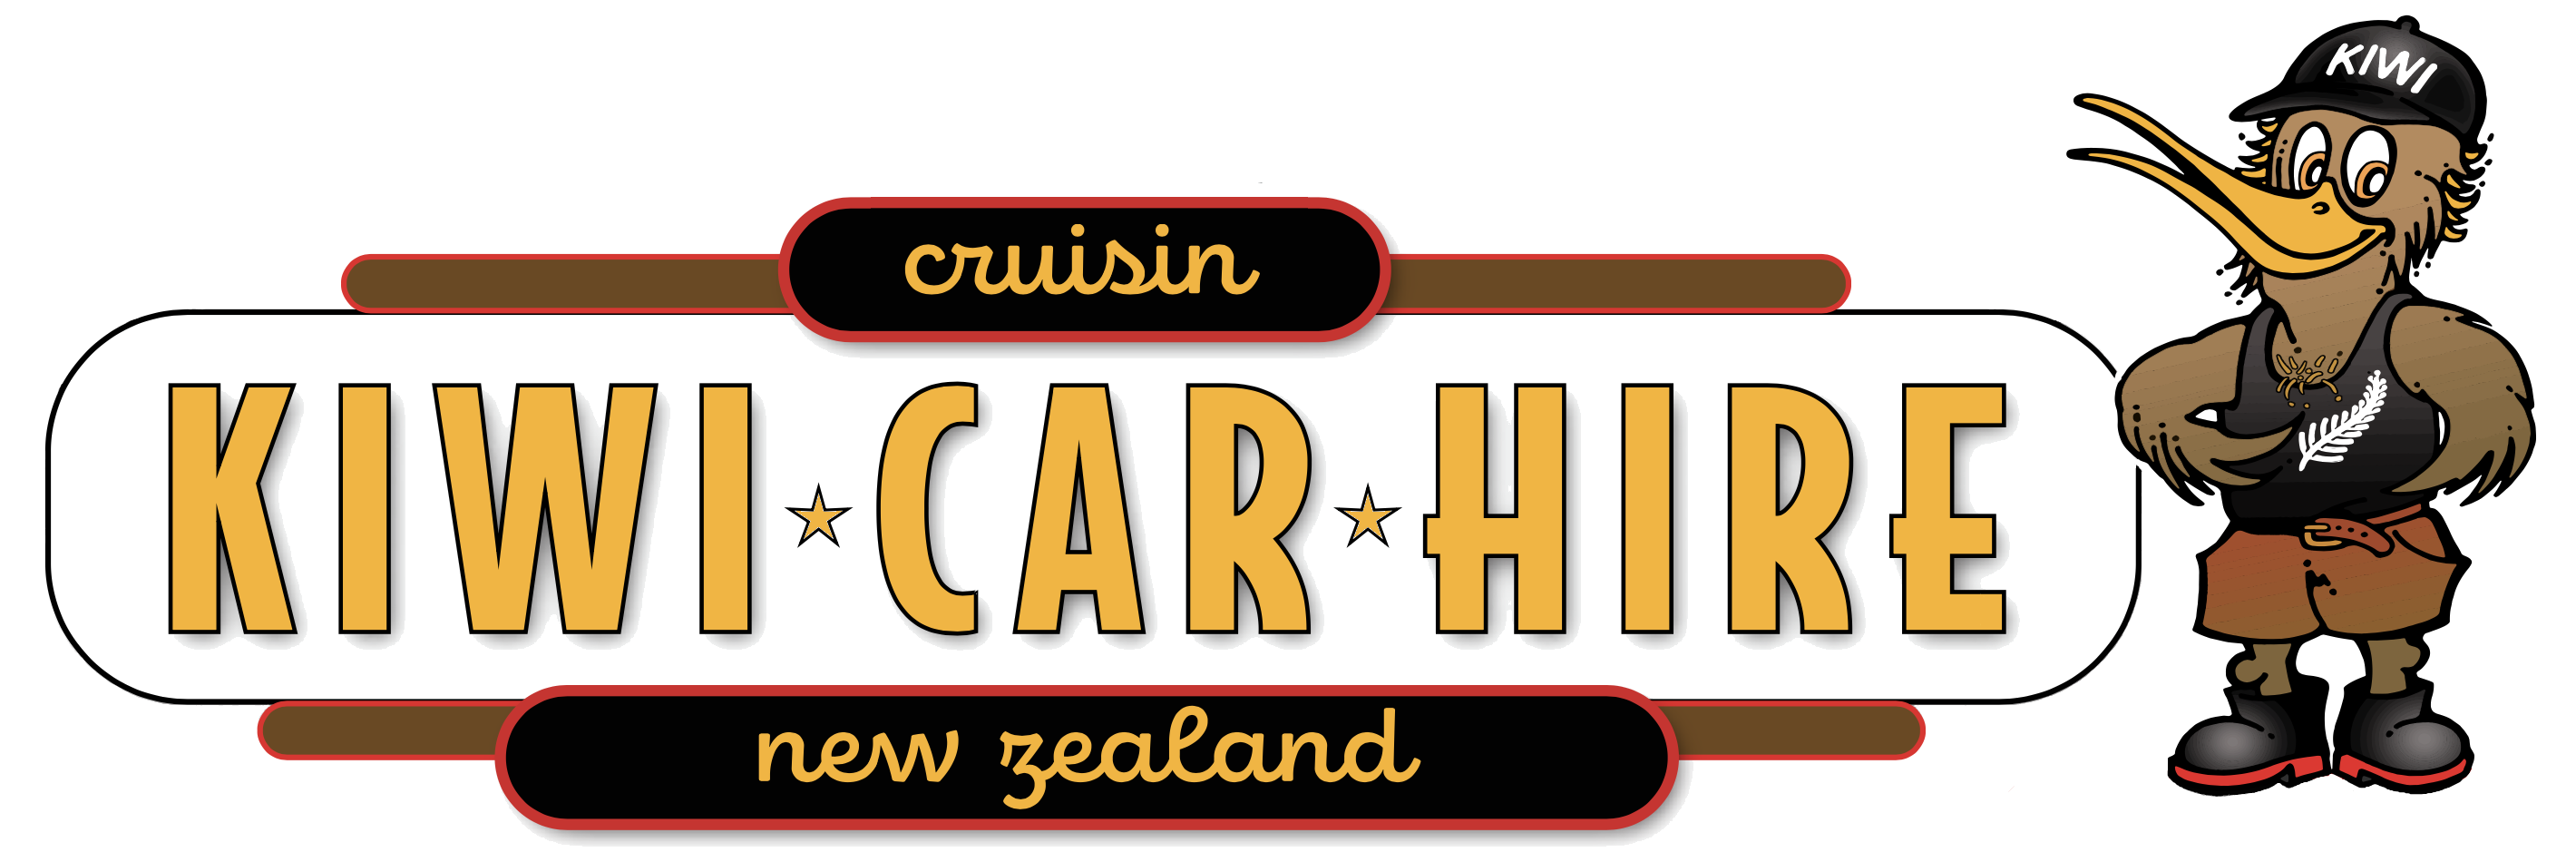 Kiwi Car Hire